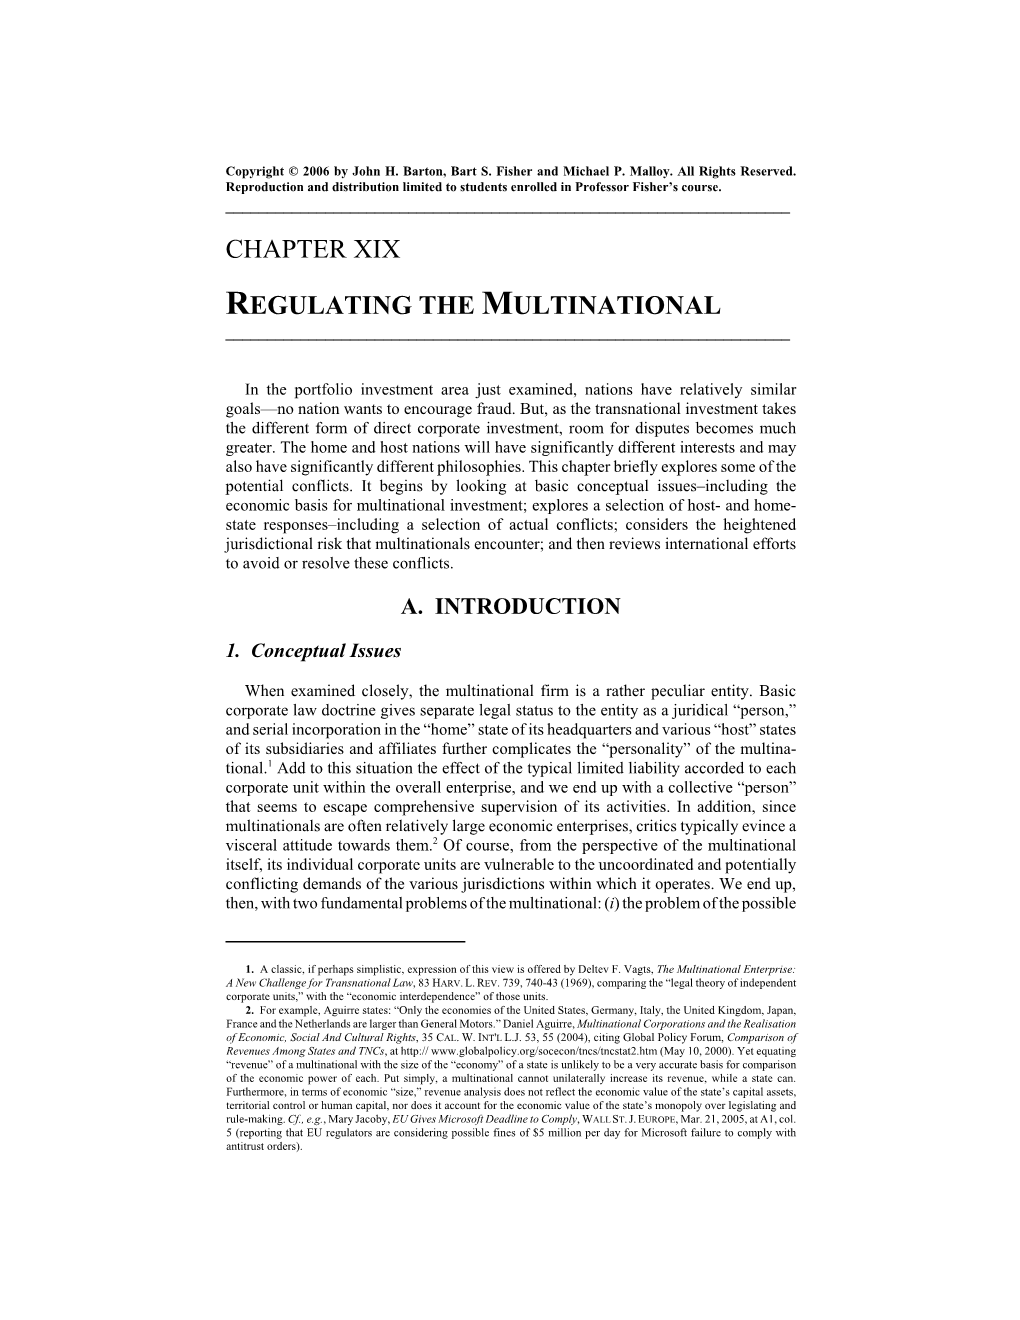 Regulating the Multinational ______